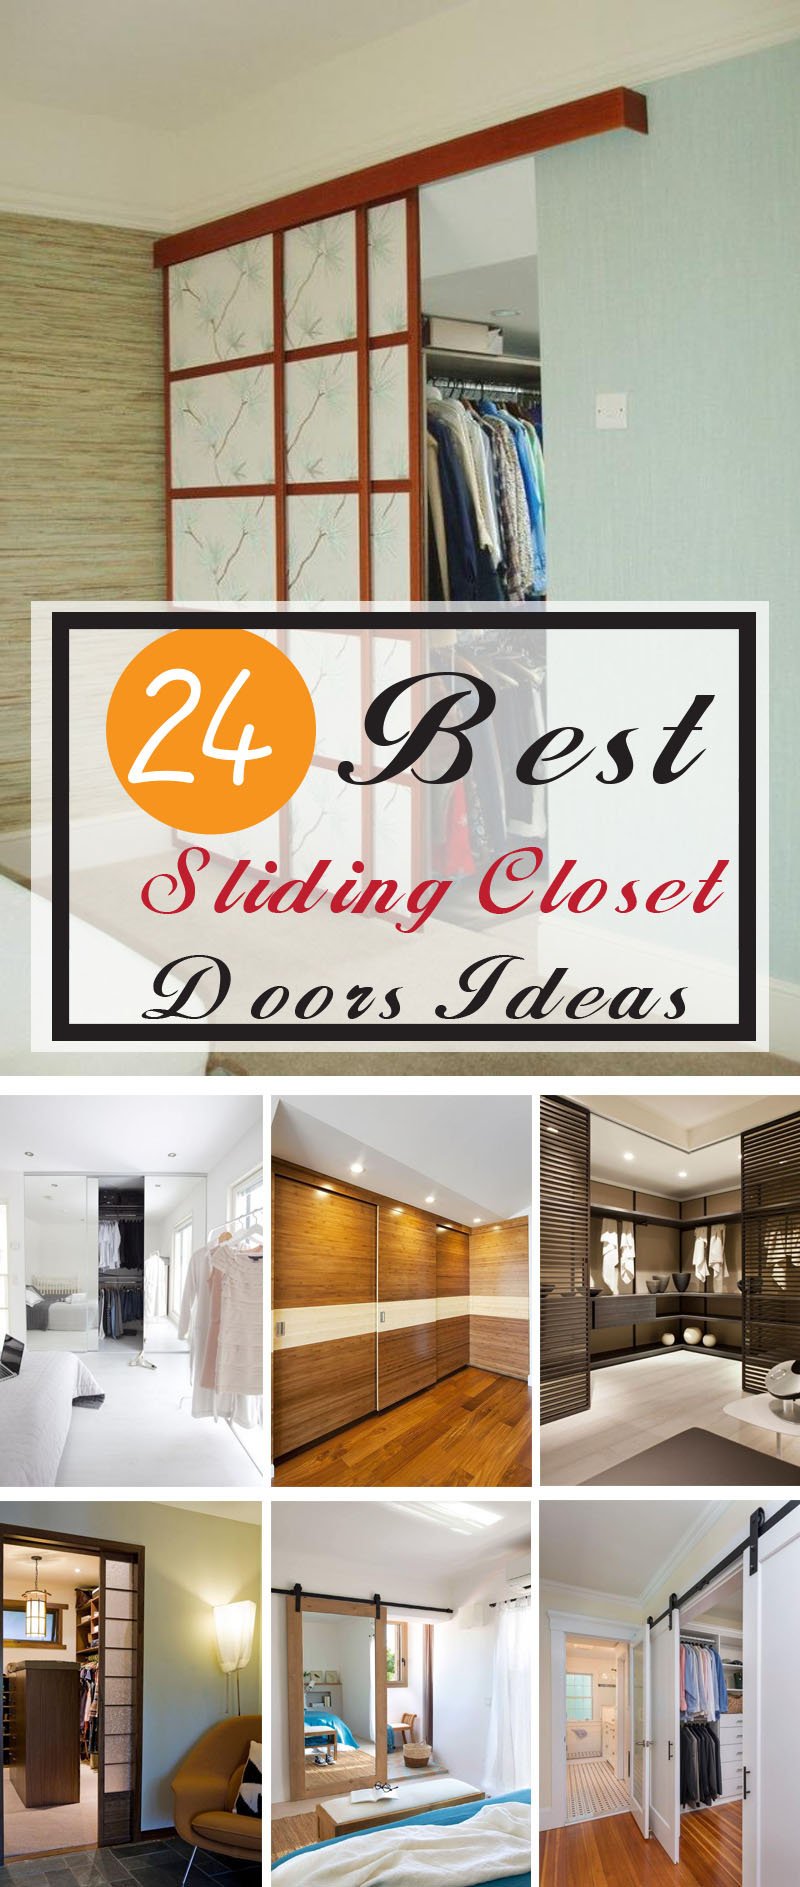 Best sliding closet doors ideas